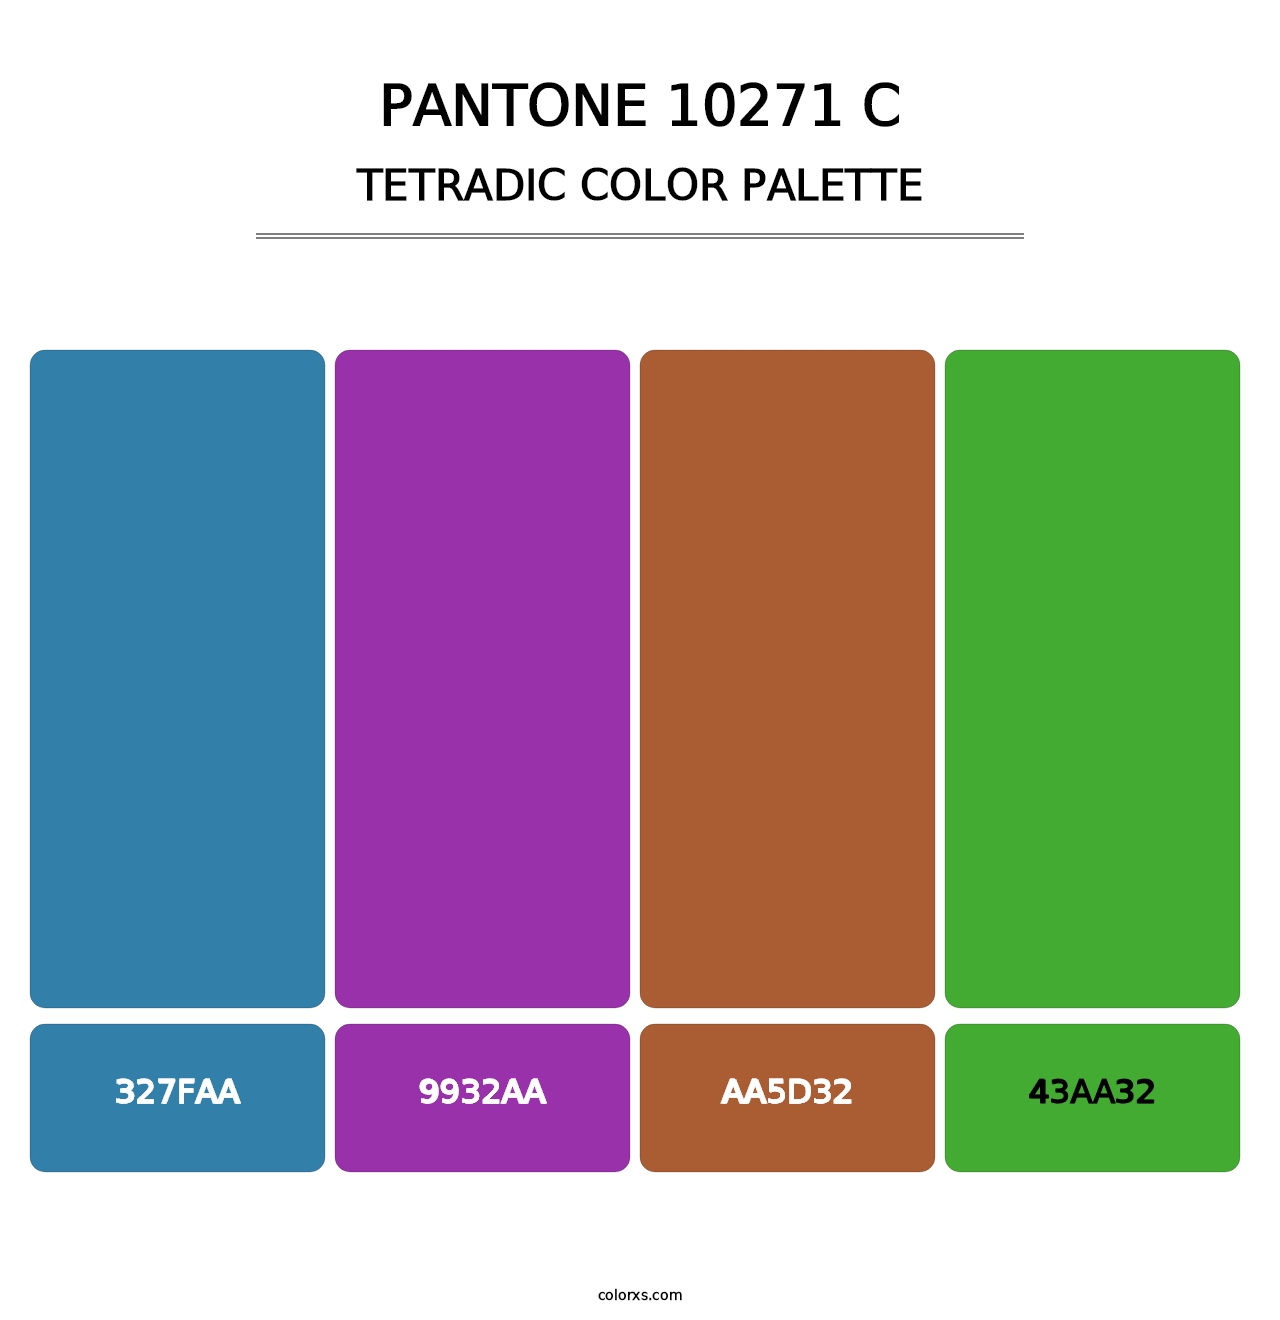 PANTONE 10271 C - Tetradic Color Palette